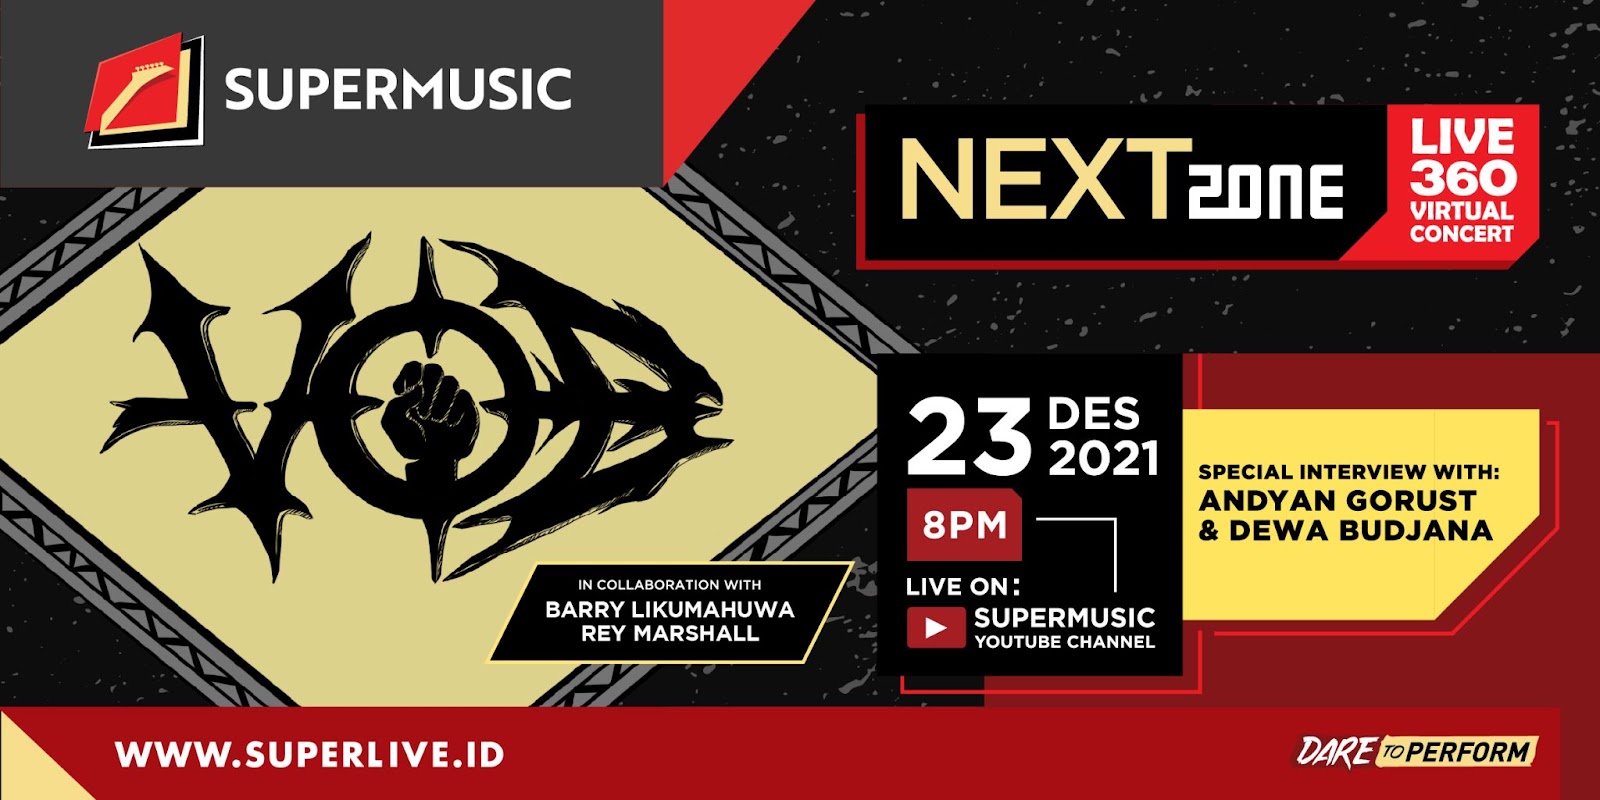 VOB Siap Bakar Panggung Supermusic NEXTZone Live 360 Virtual Concert